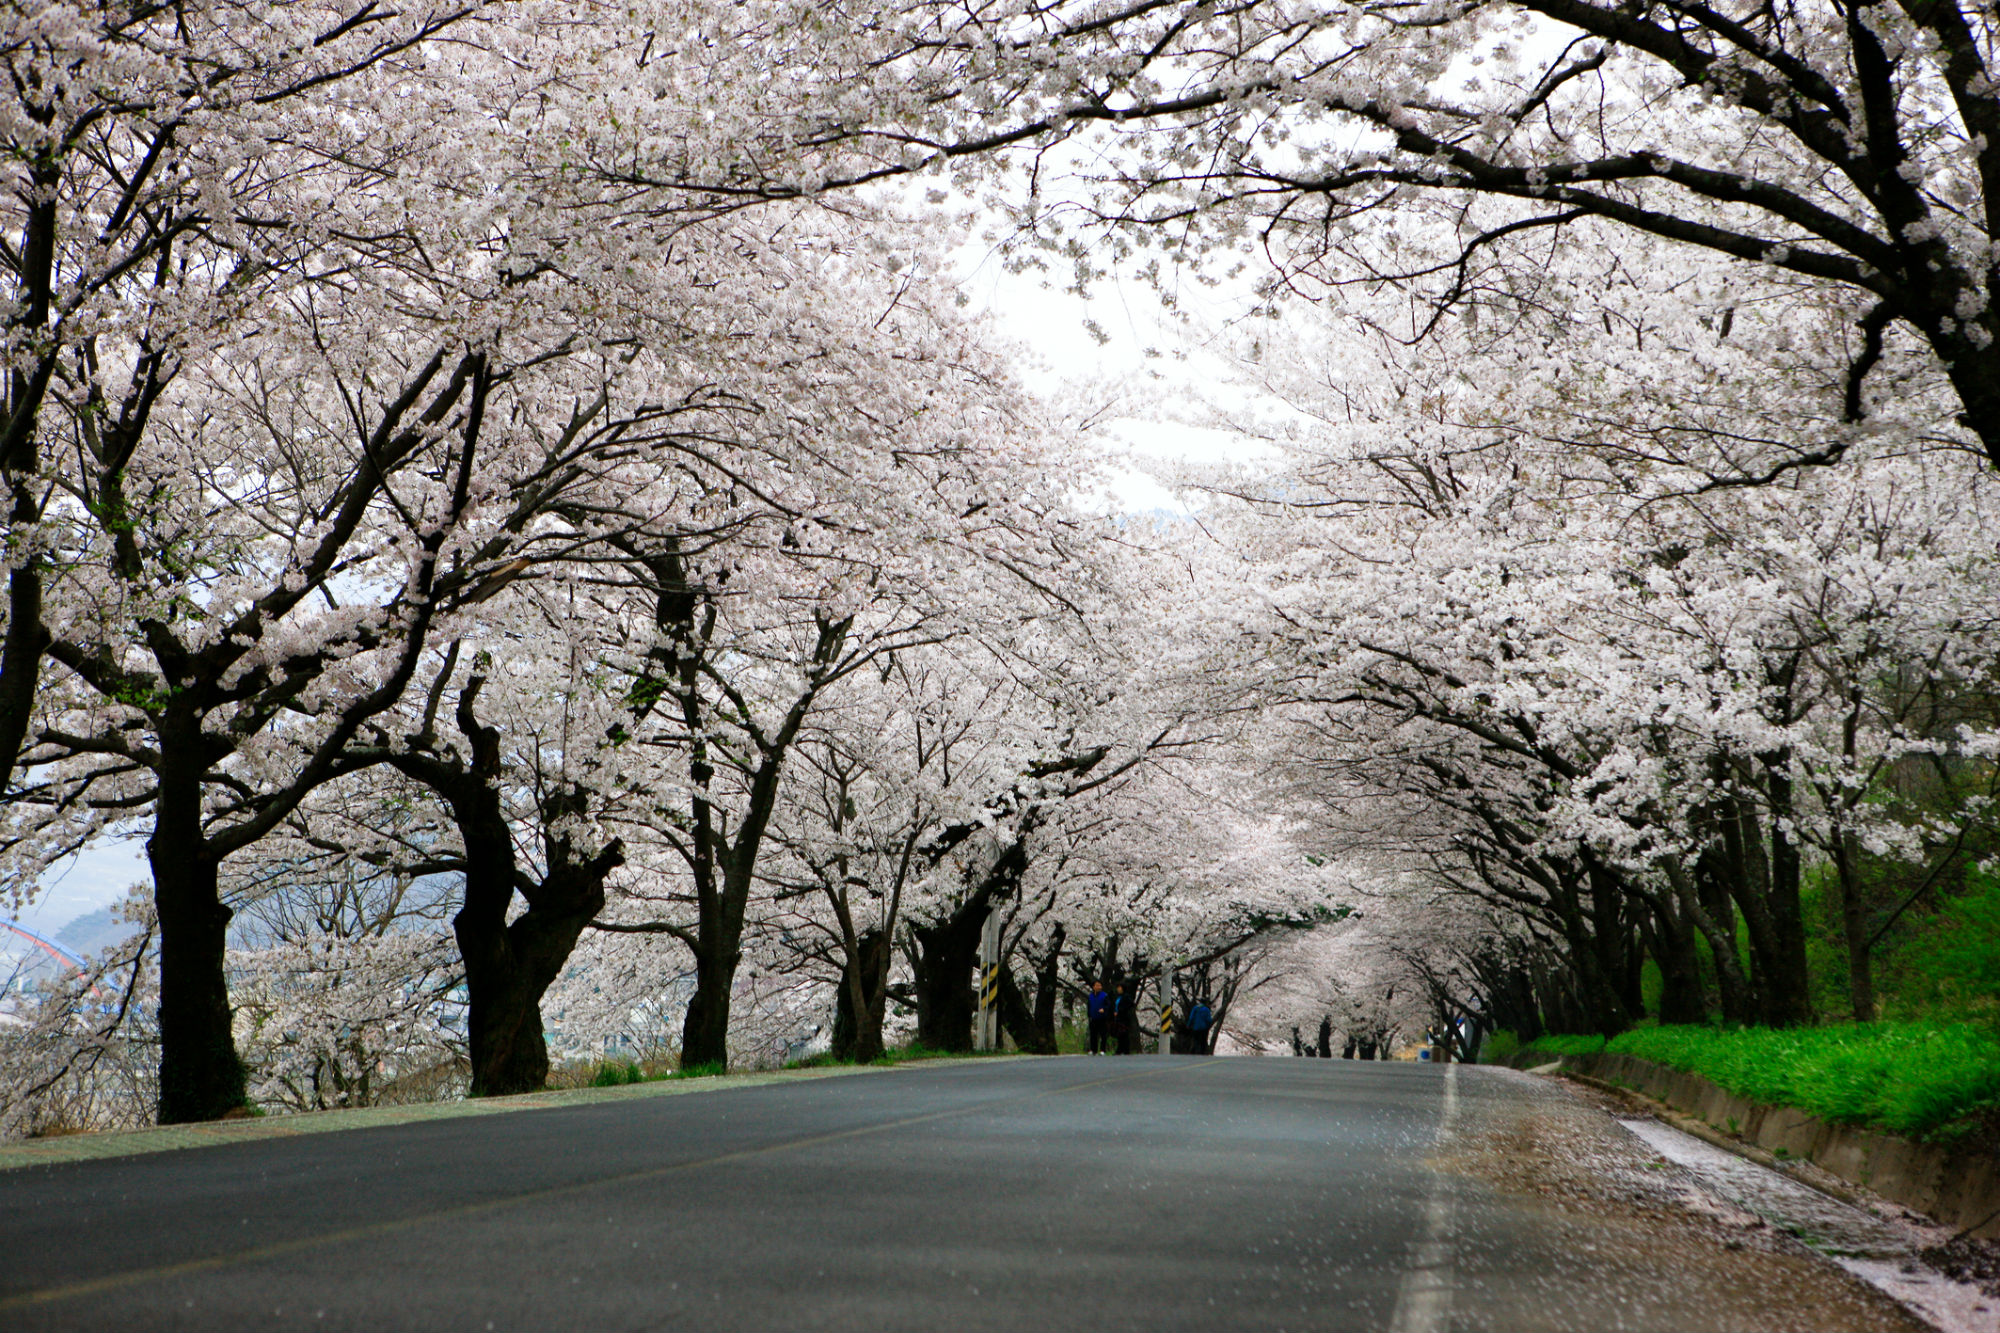 Winter spring. Япония дорога. Сакура дорога. Япония дорога с сакурой. Весна в Японии дорога.